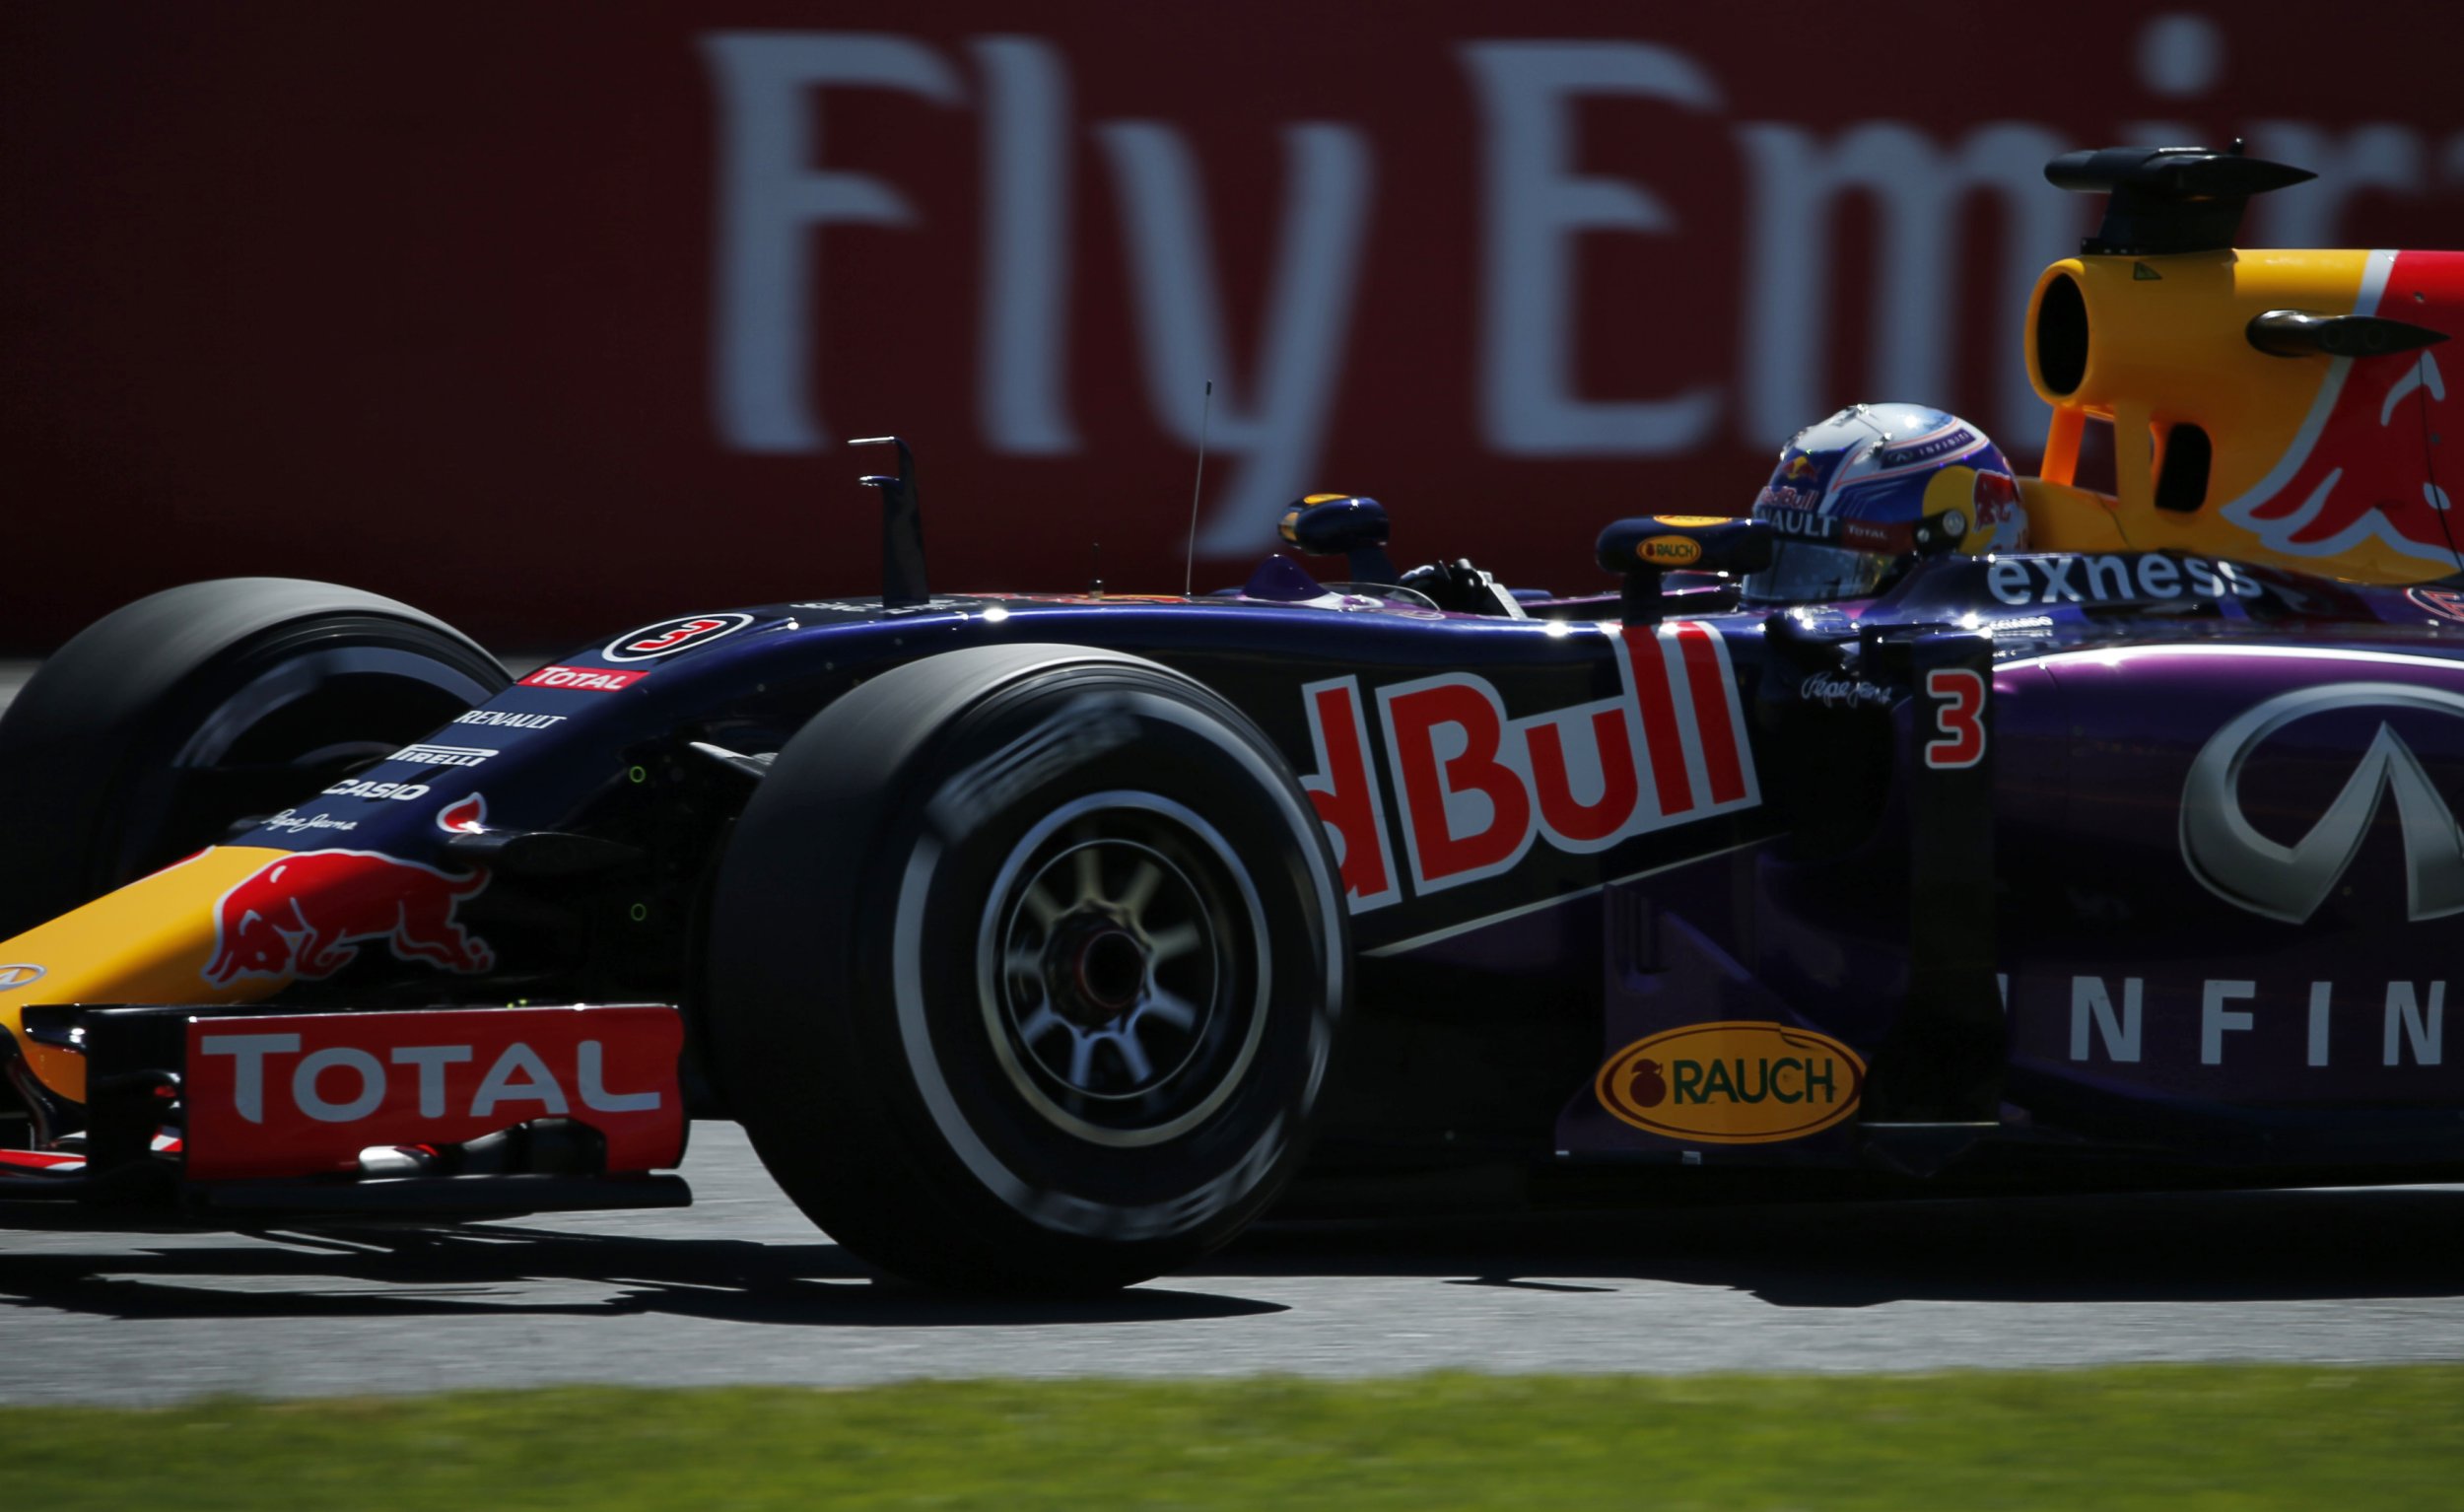 2015 F1 Australian GP Live Stream Watch Formula 1 Grand Prix Online